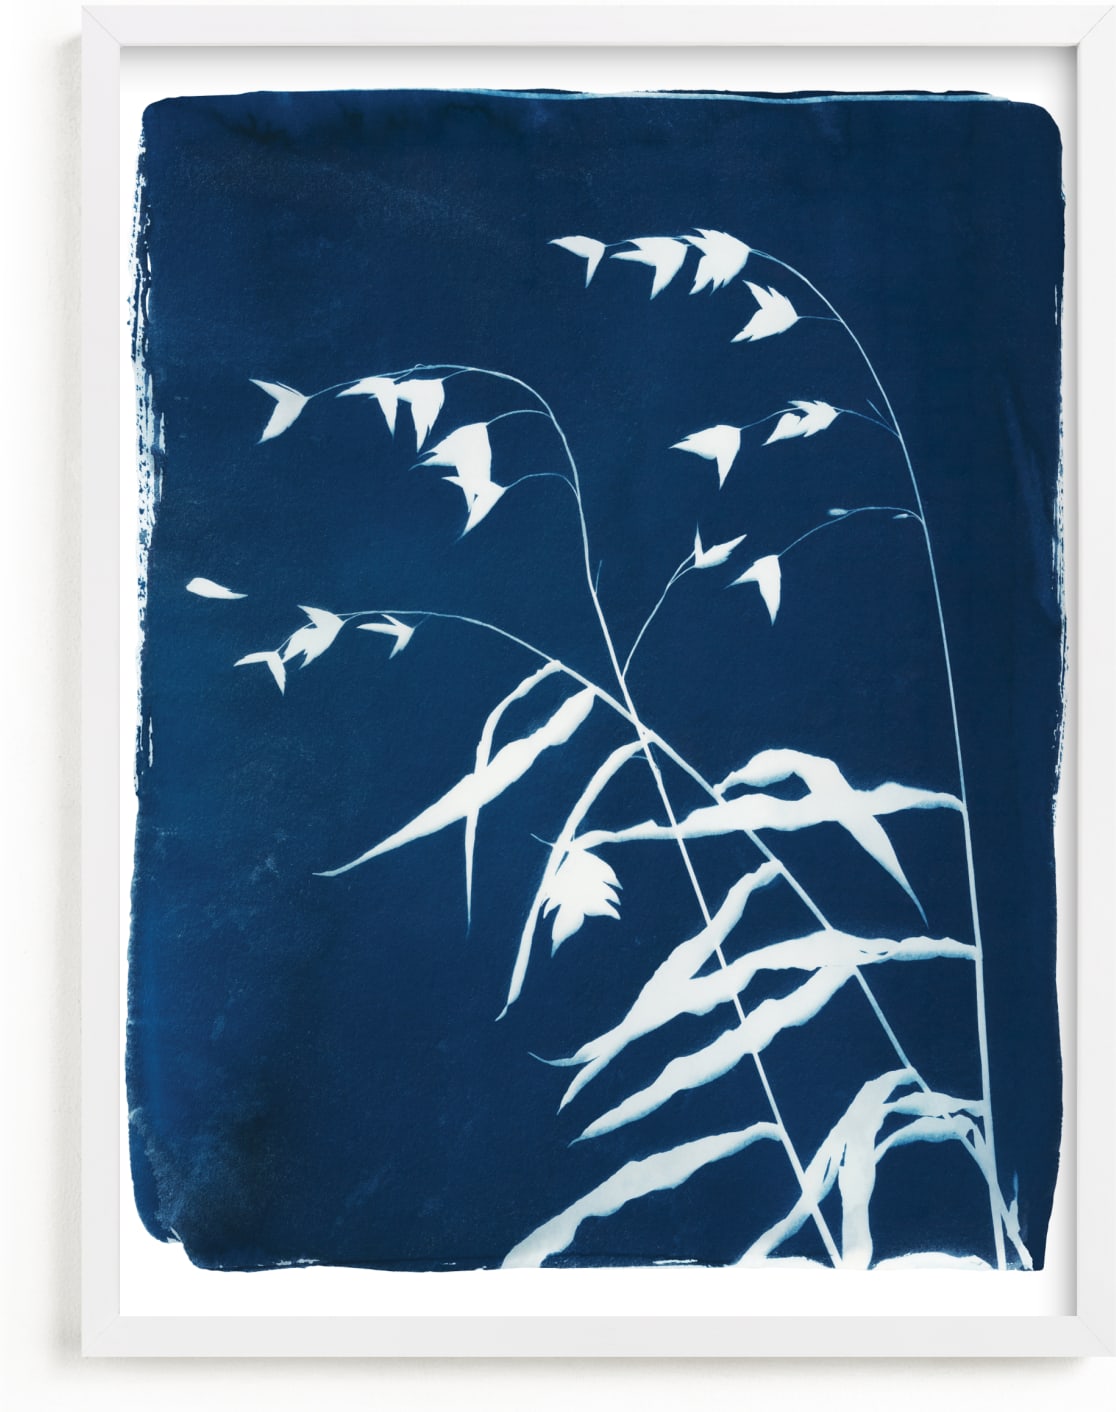 This is a blue art by Renée Stramel called Sea Oats Cyanotype.